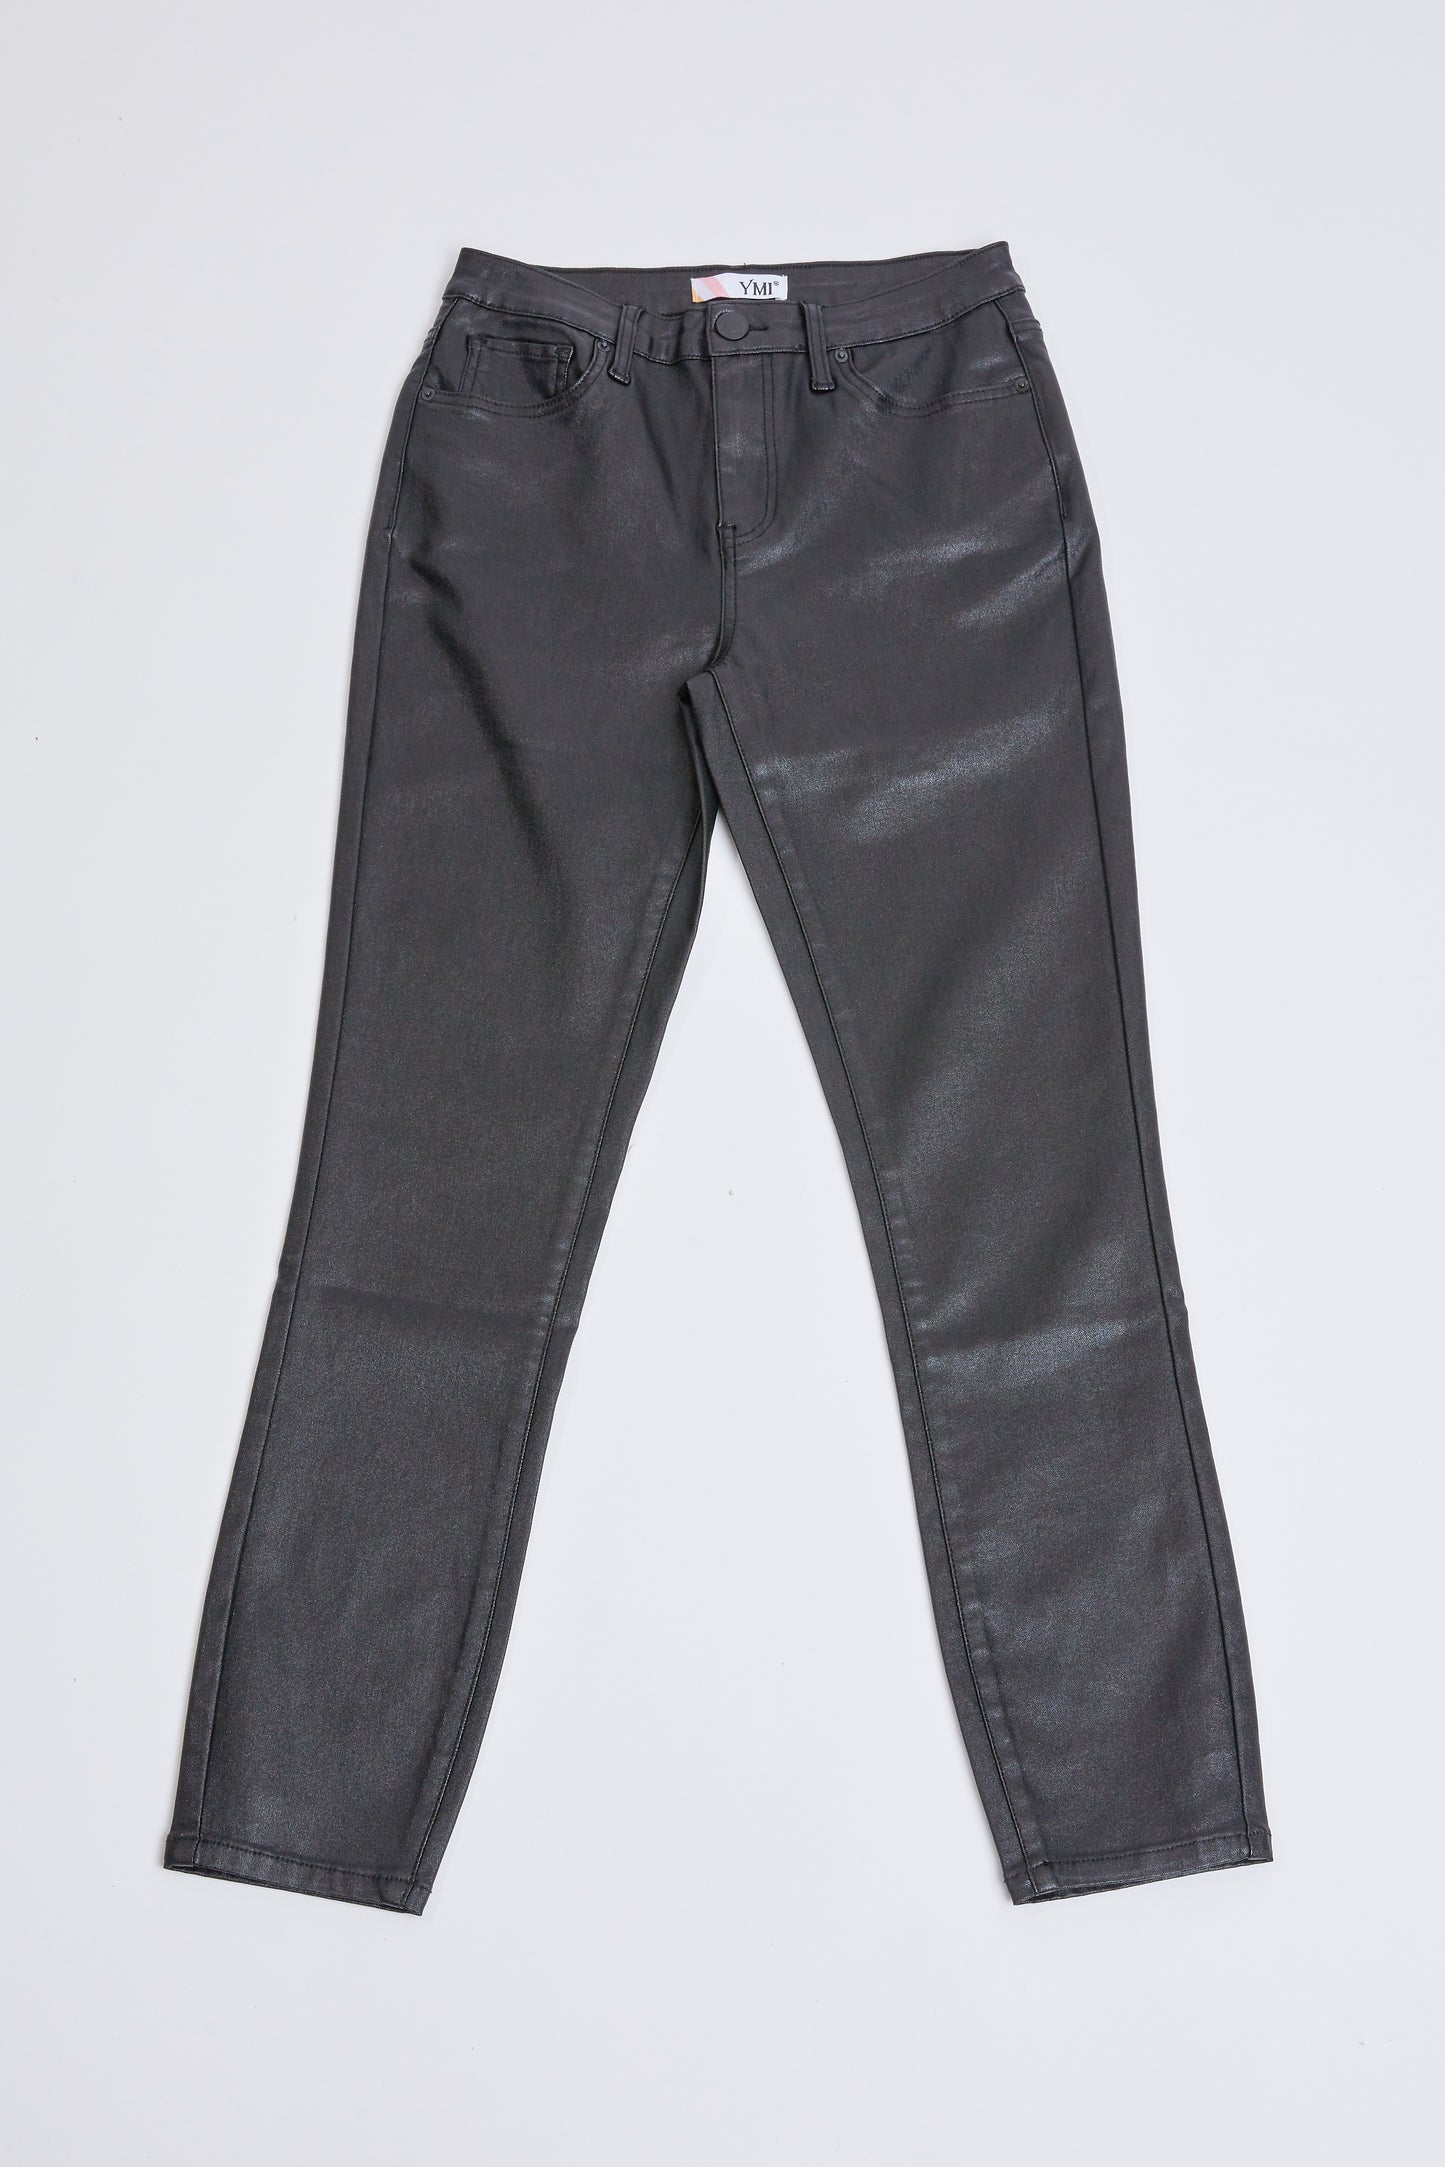 YMI Hyperstretch Metallic Skinny Pants